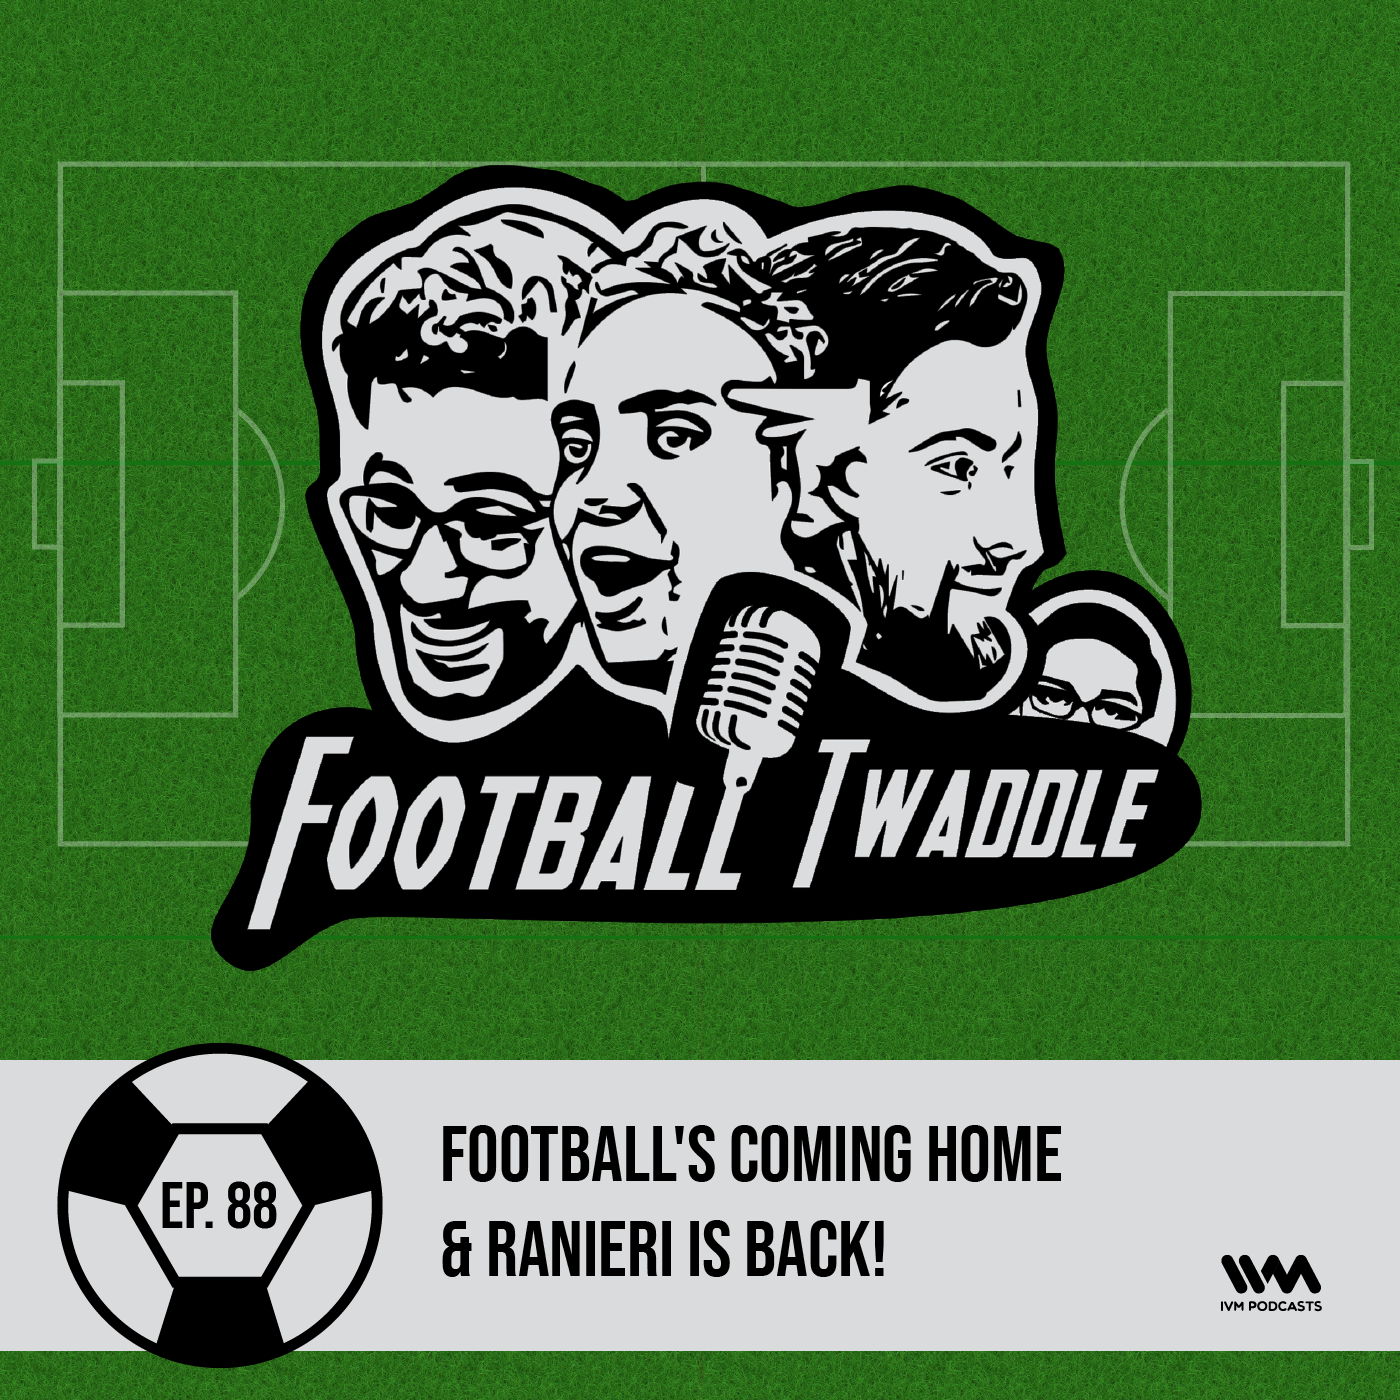 Football's coming home & Ranieri is back!